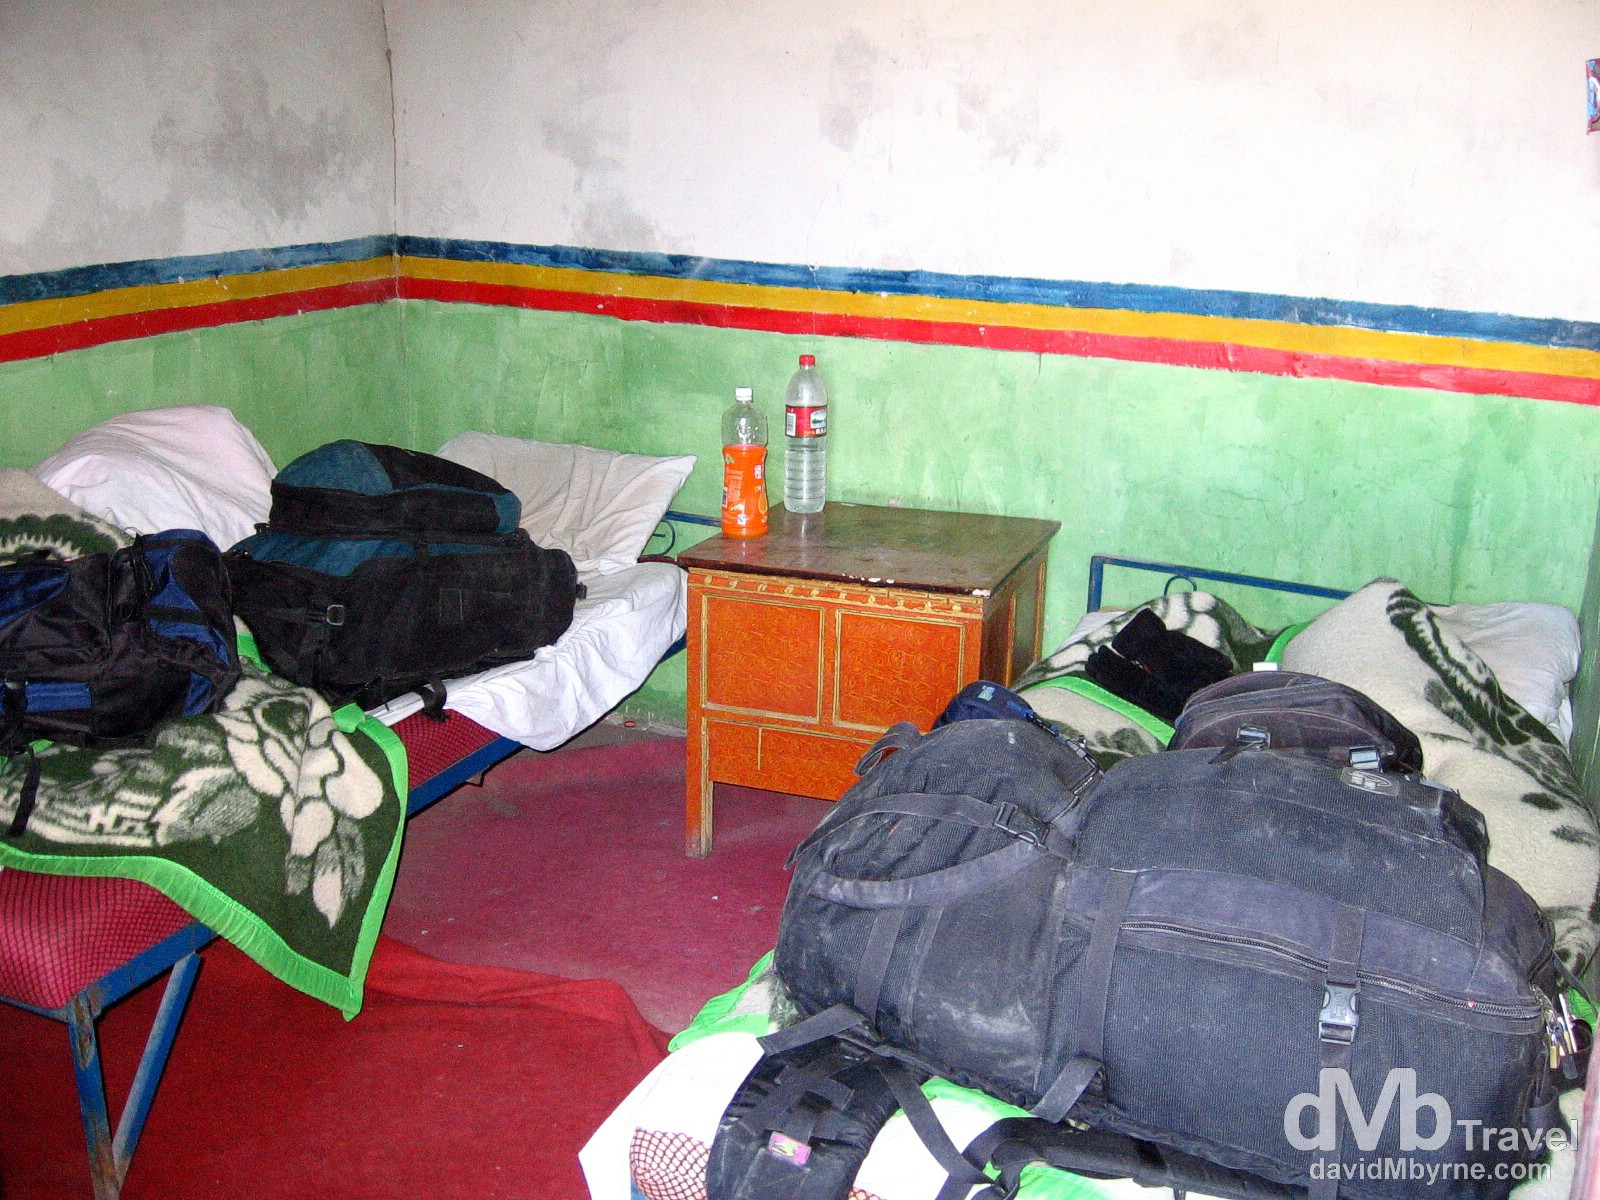 Amdo Hotel room, Tingri, Tibet. March 3rd, 2008. 